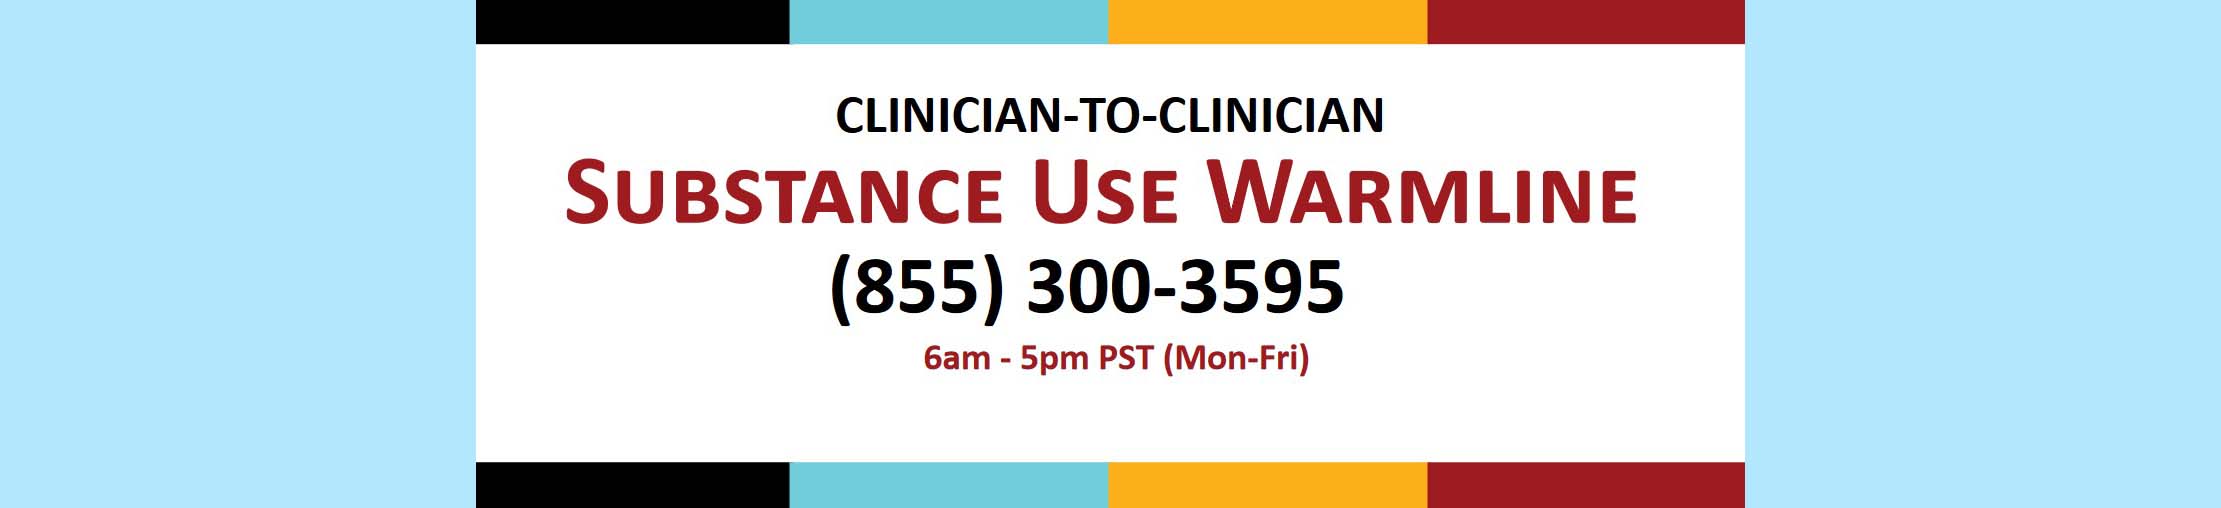 Clinician Substance Use Warmline 1-855-300-3595 Mon-Fri 6am to 5pm PT